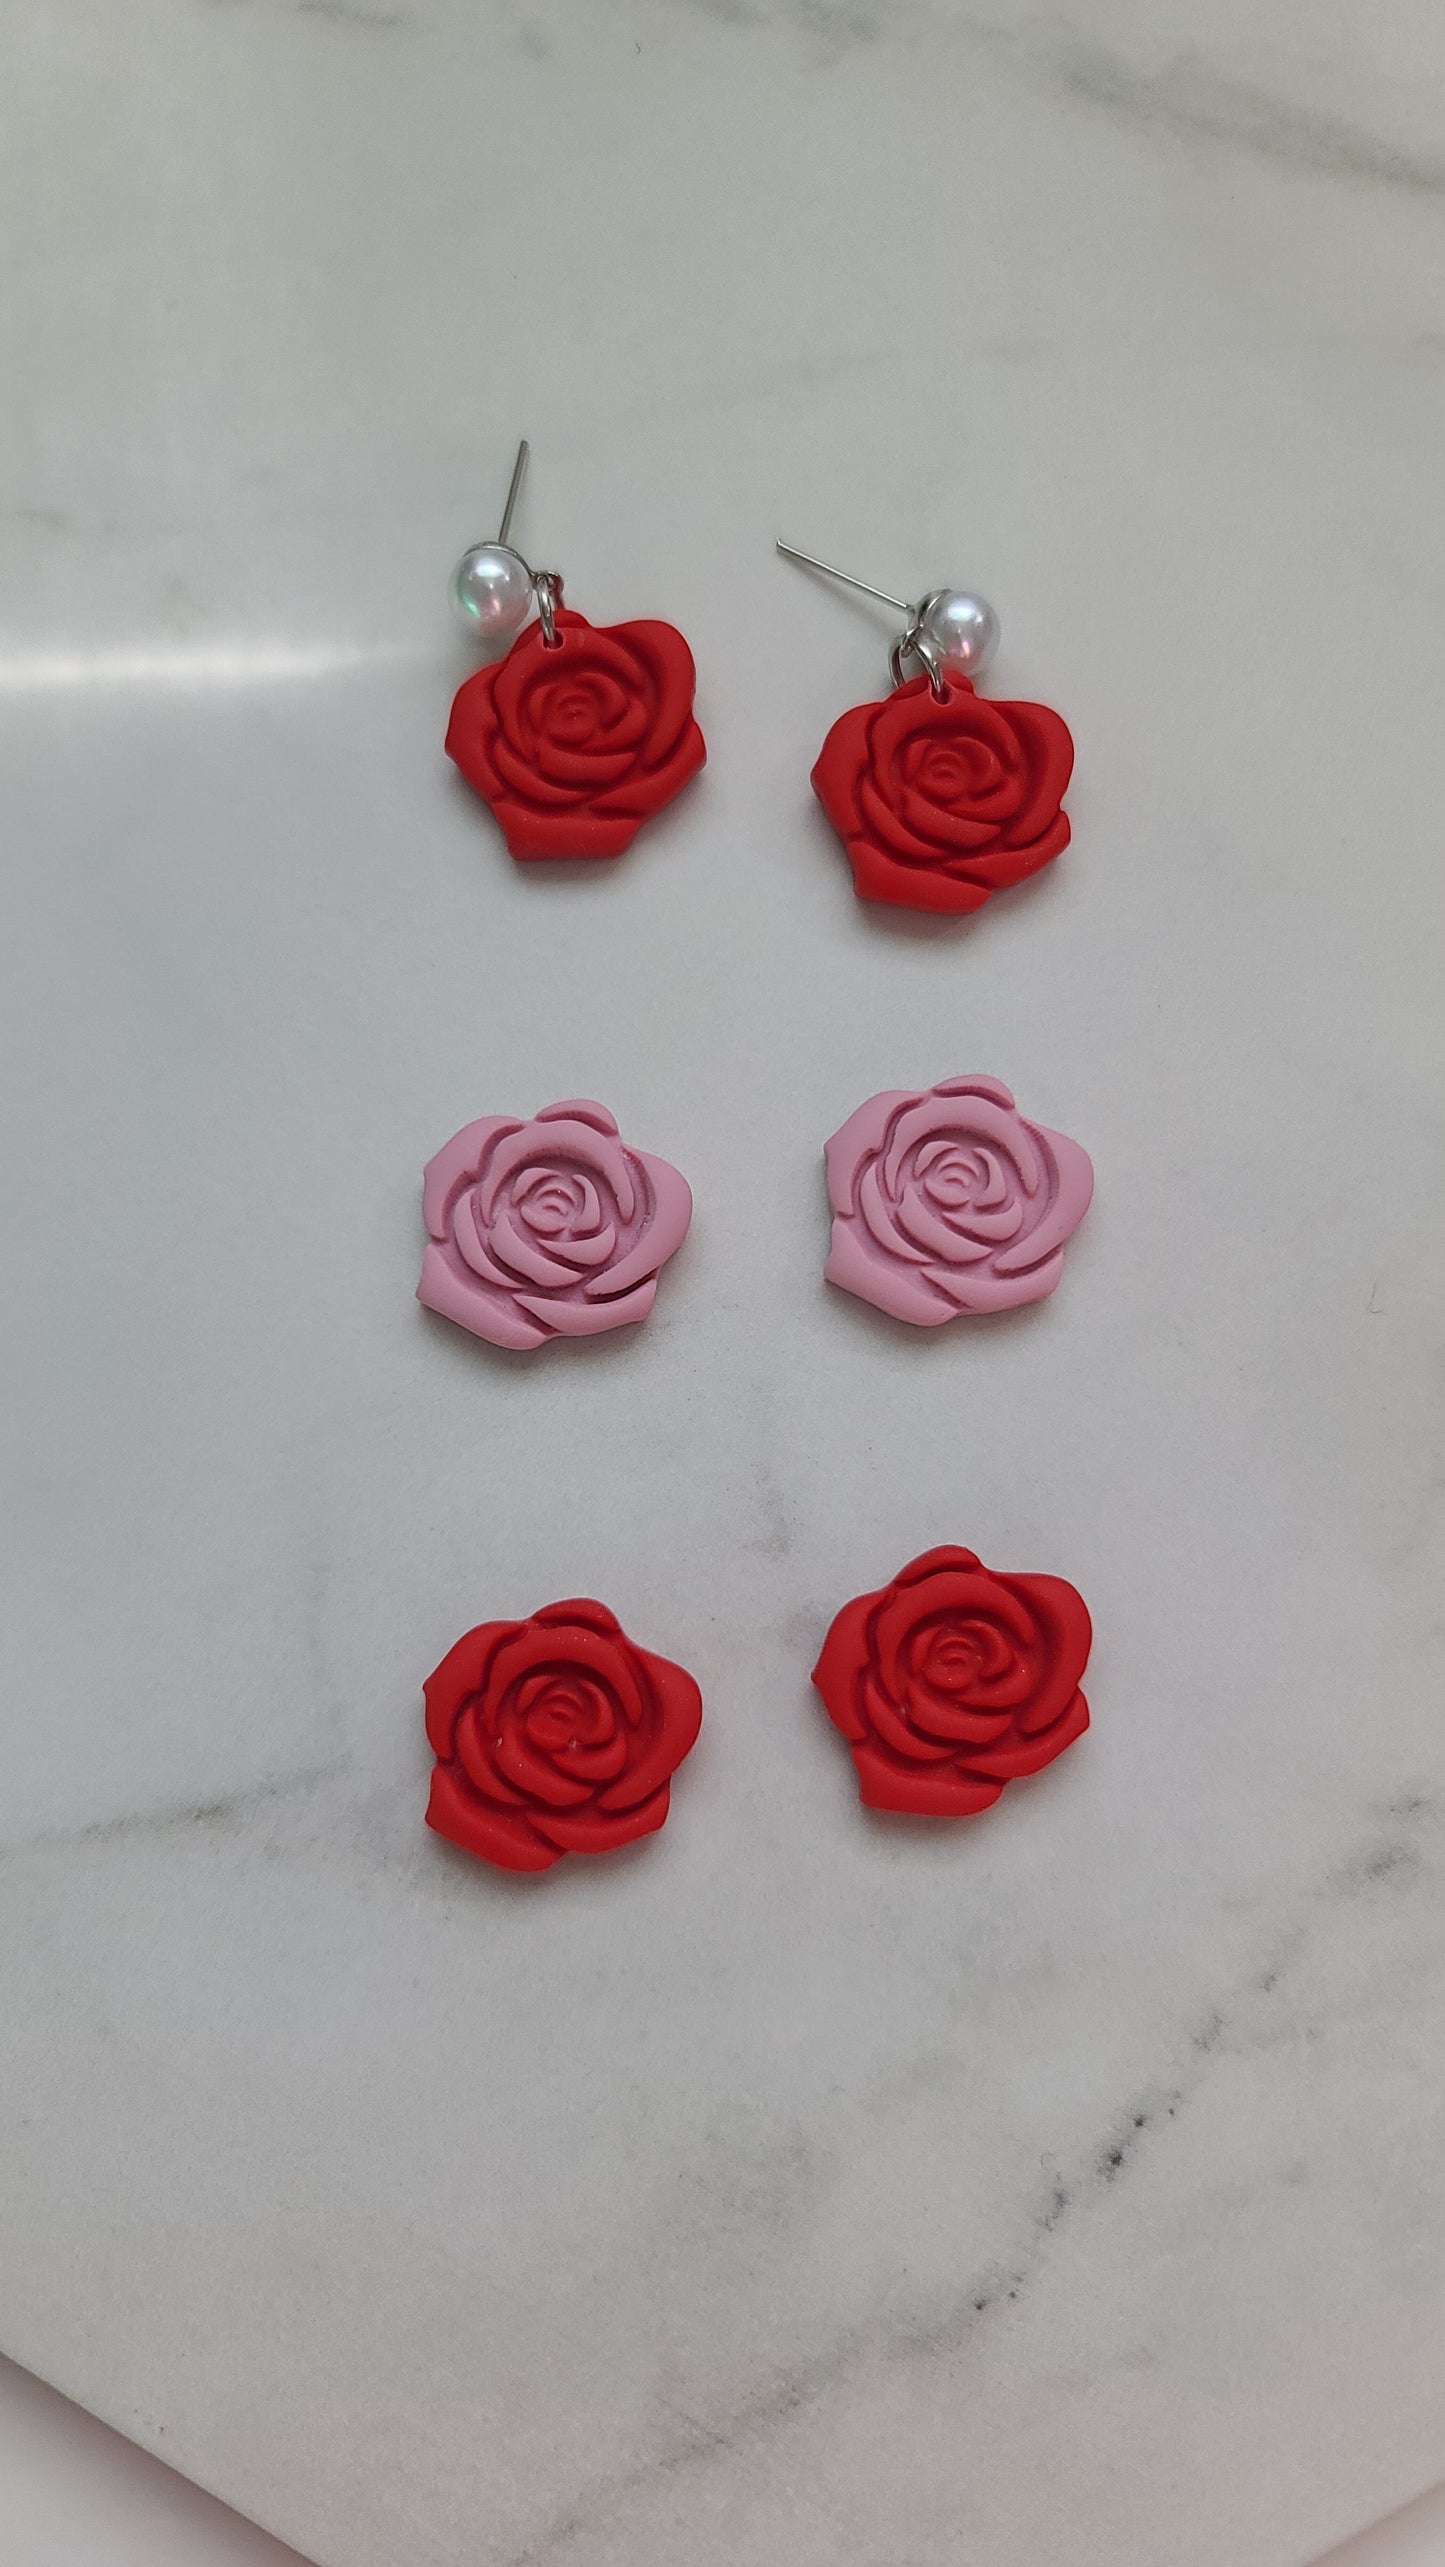 Rose studs earrings